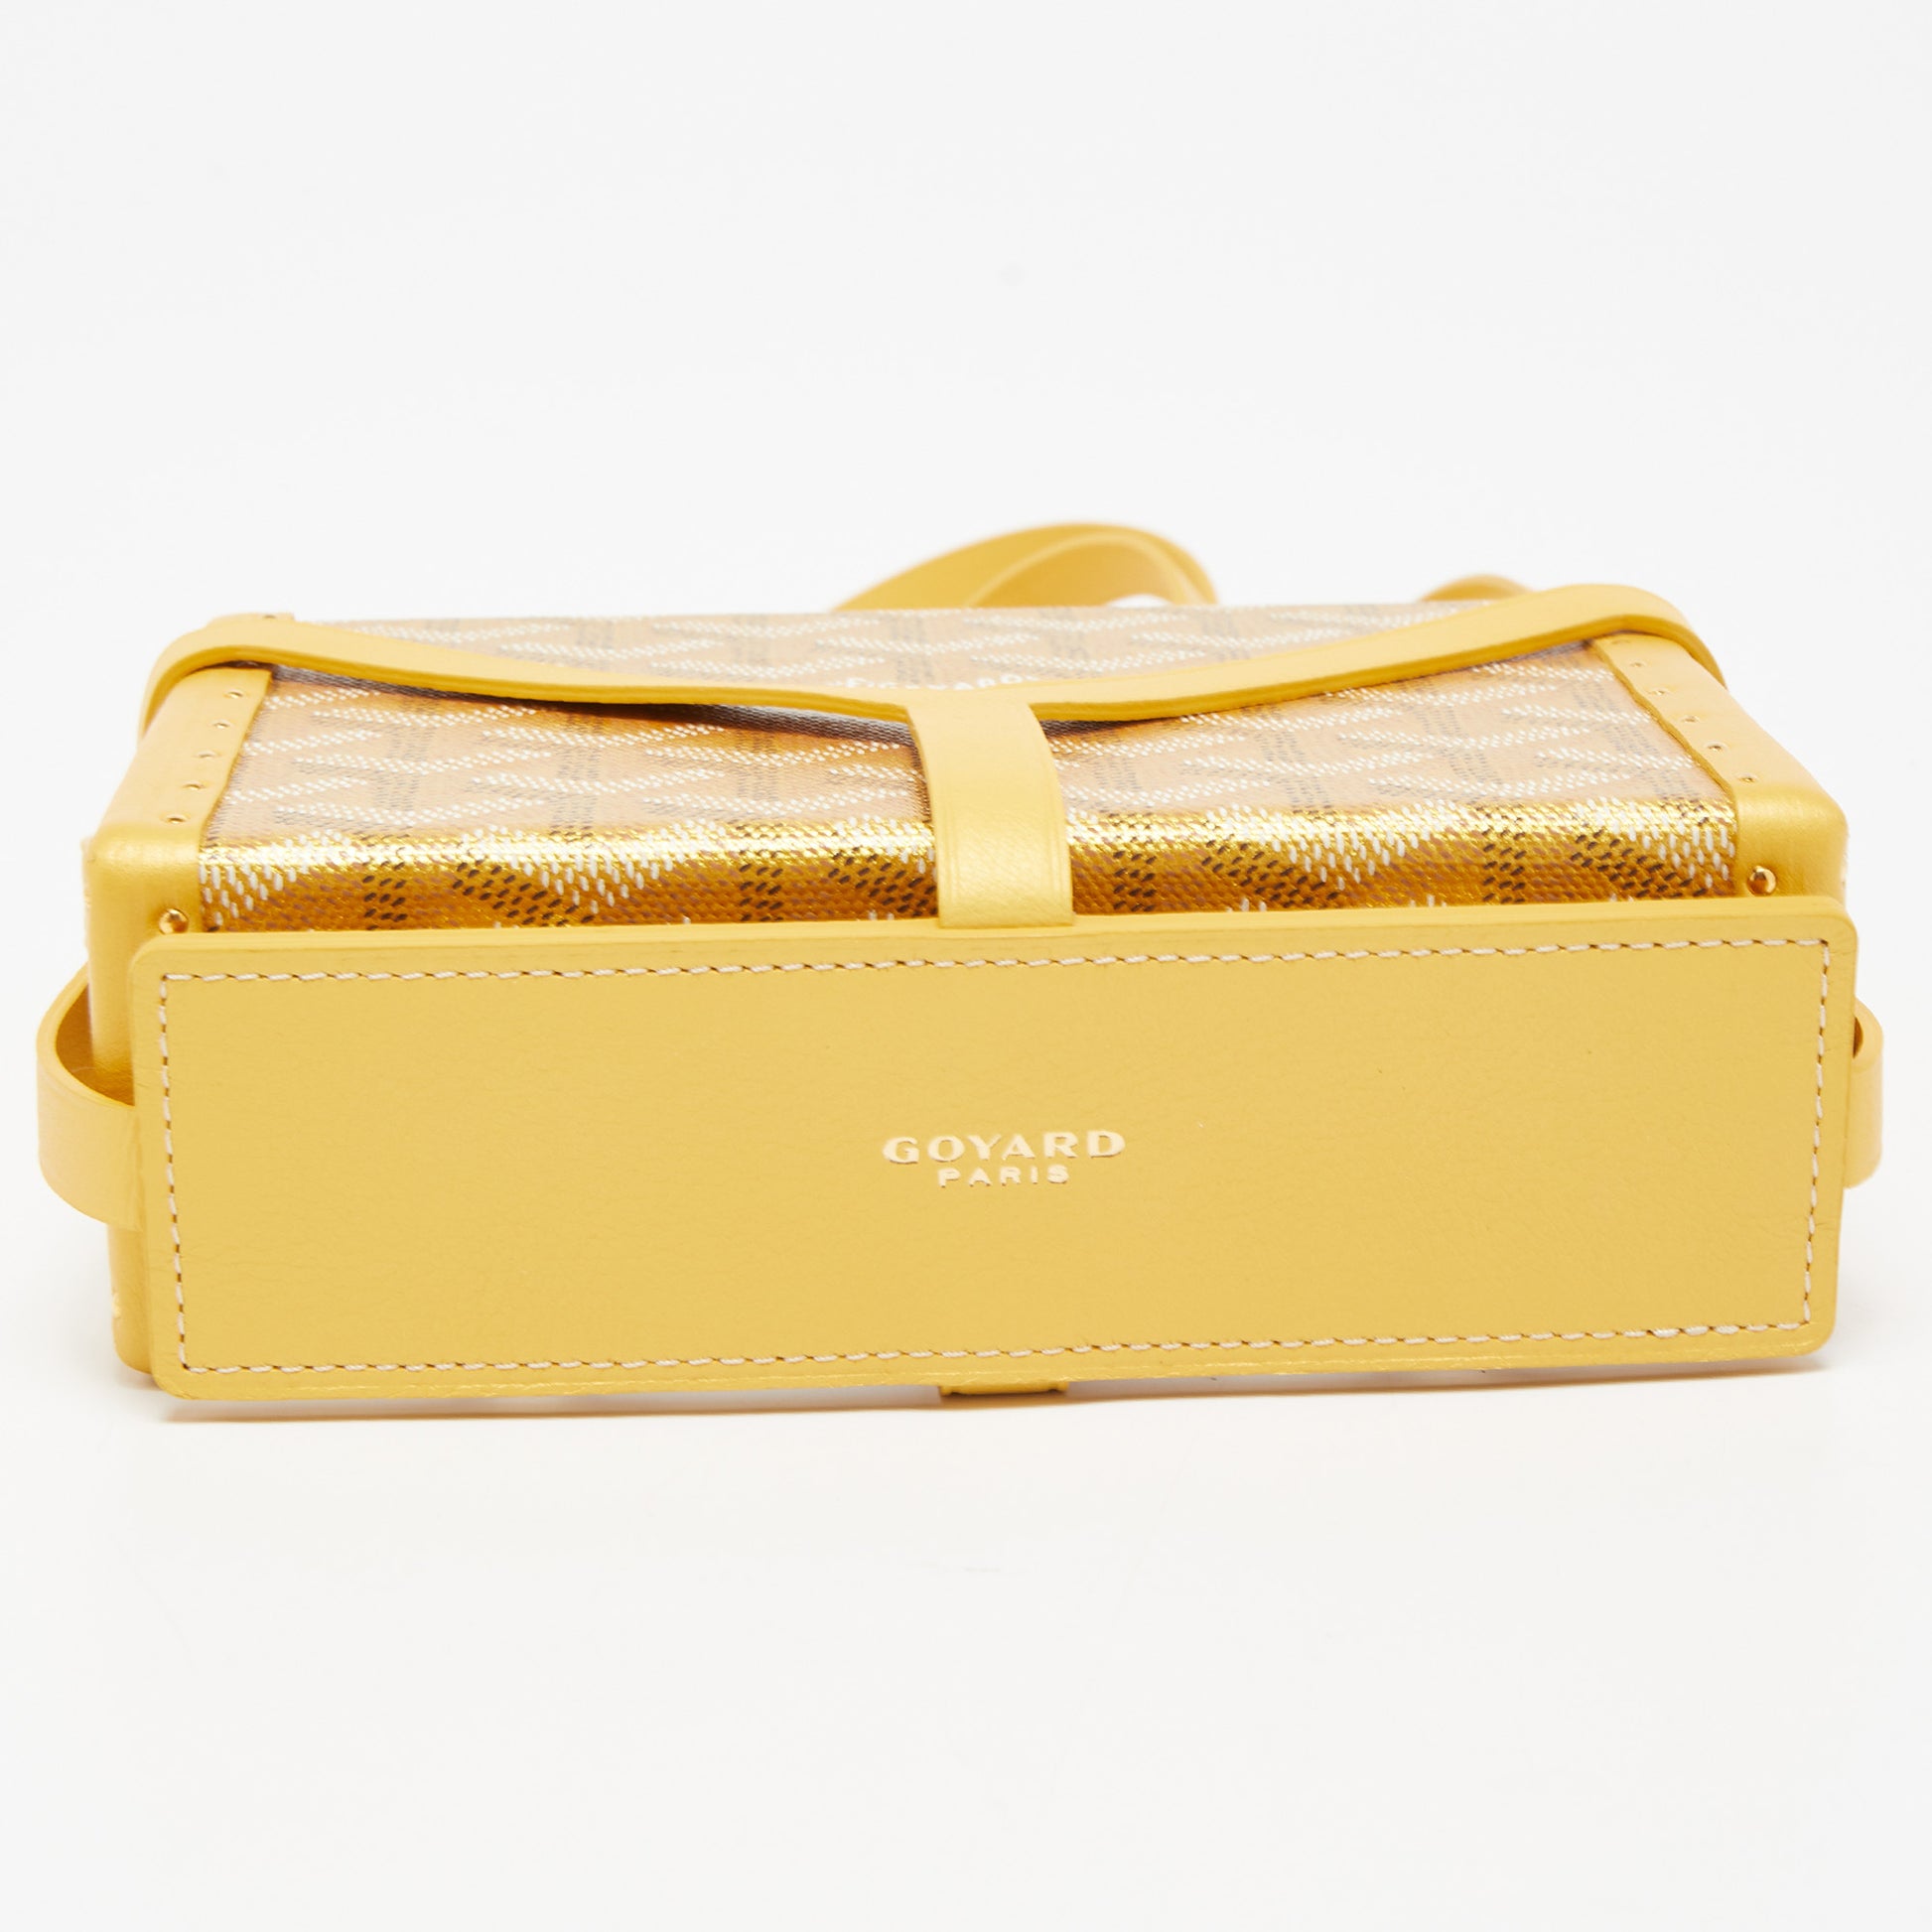 Goyard Yellow/Gold Coated Canvas and Leather Minaudiere Trunk Bag Goyard